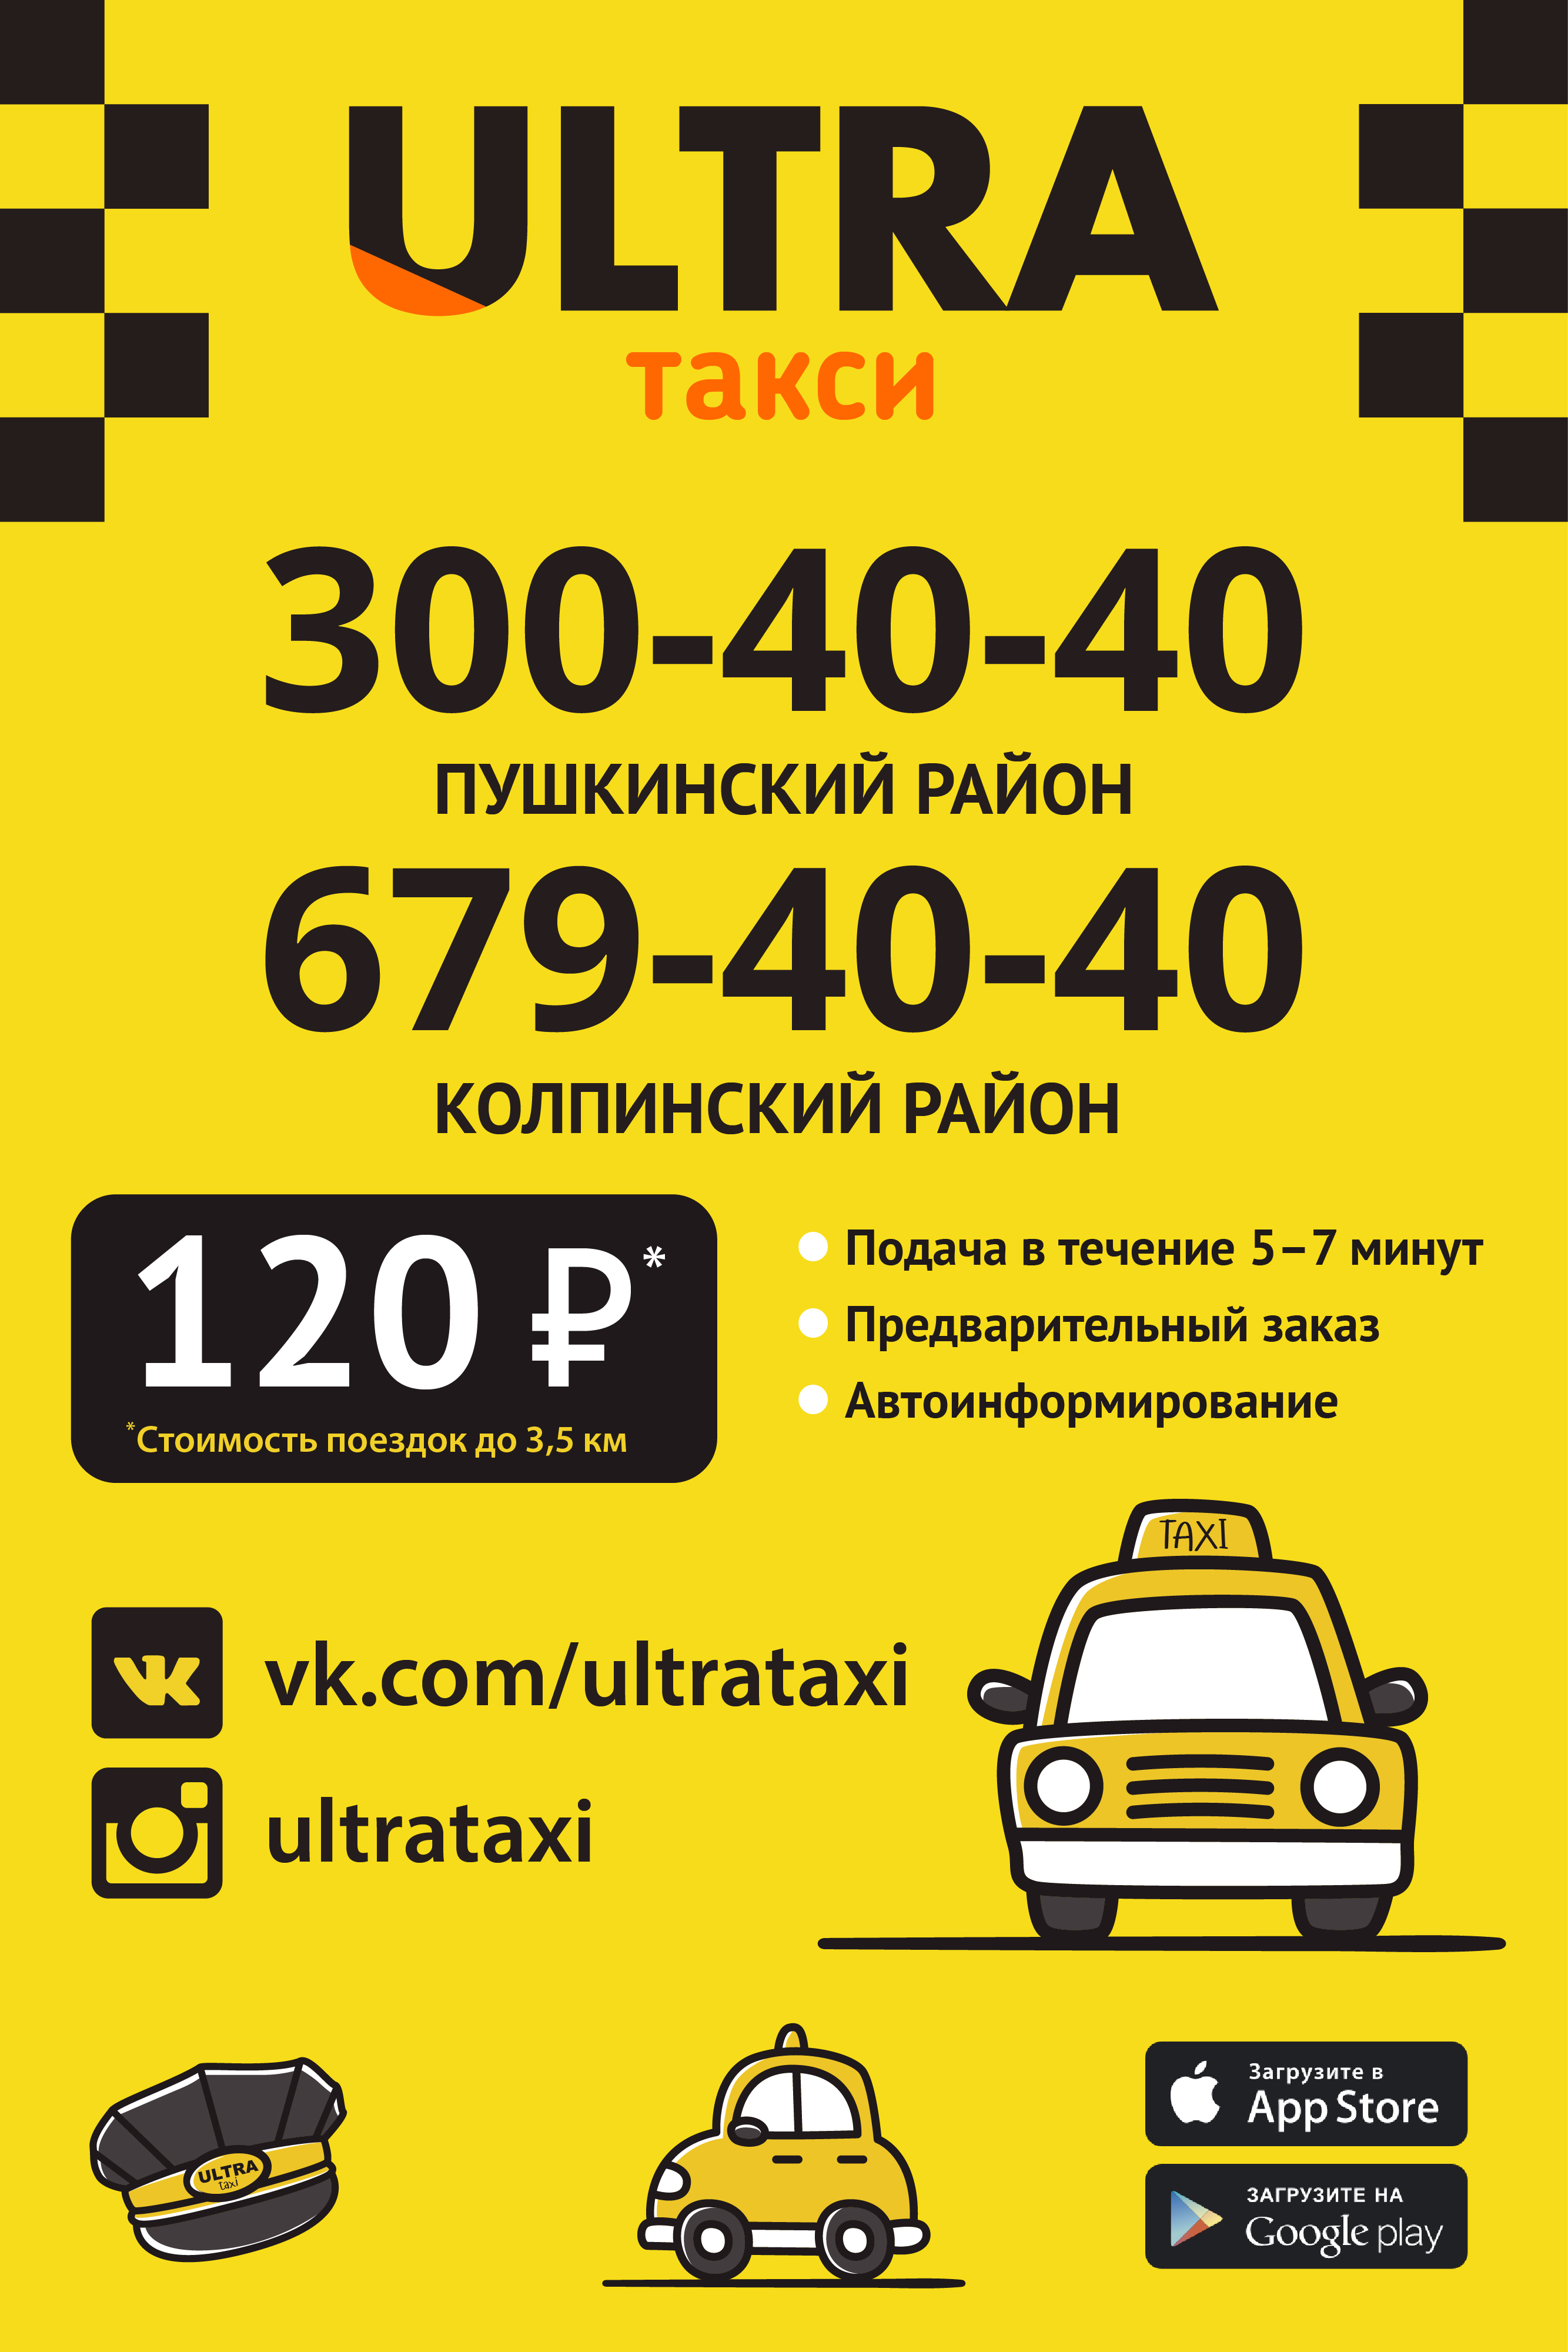 Номер телефона такси полевской. Номер такси. Номера таксистов. Номер телефона такси. Номер телефона таксиста.